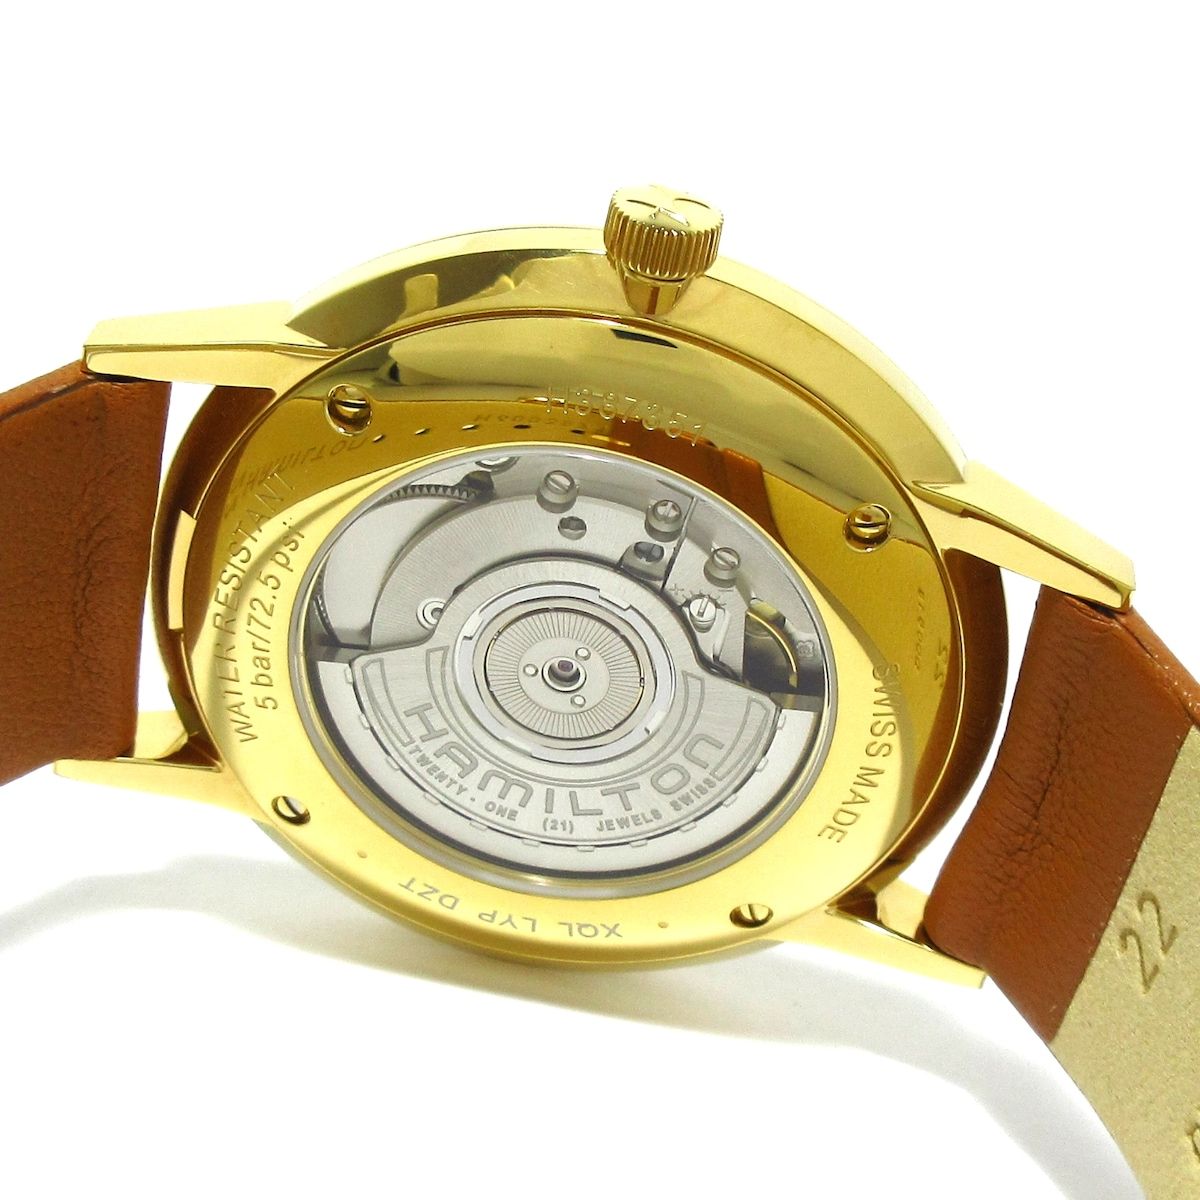 HAMILTON(ハミルトン) 腕時計新品同様 イントラマティック H387351 